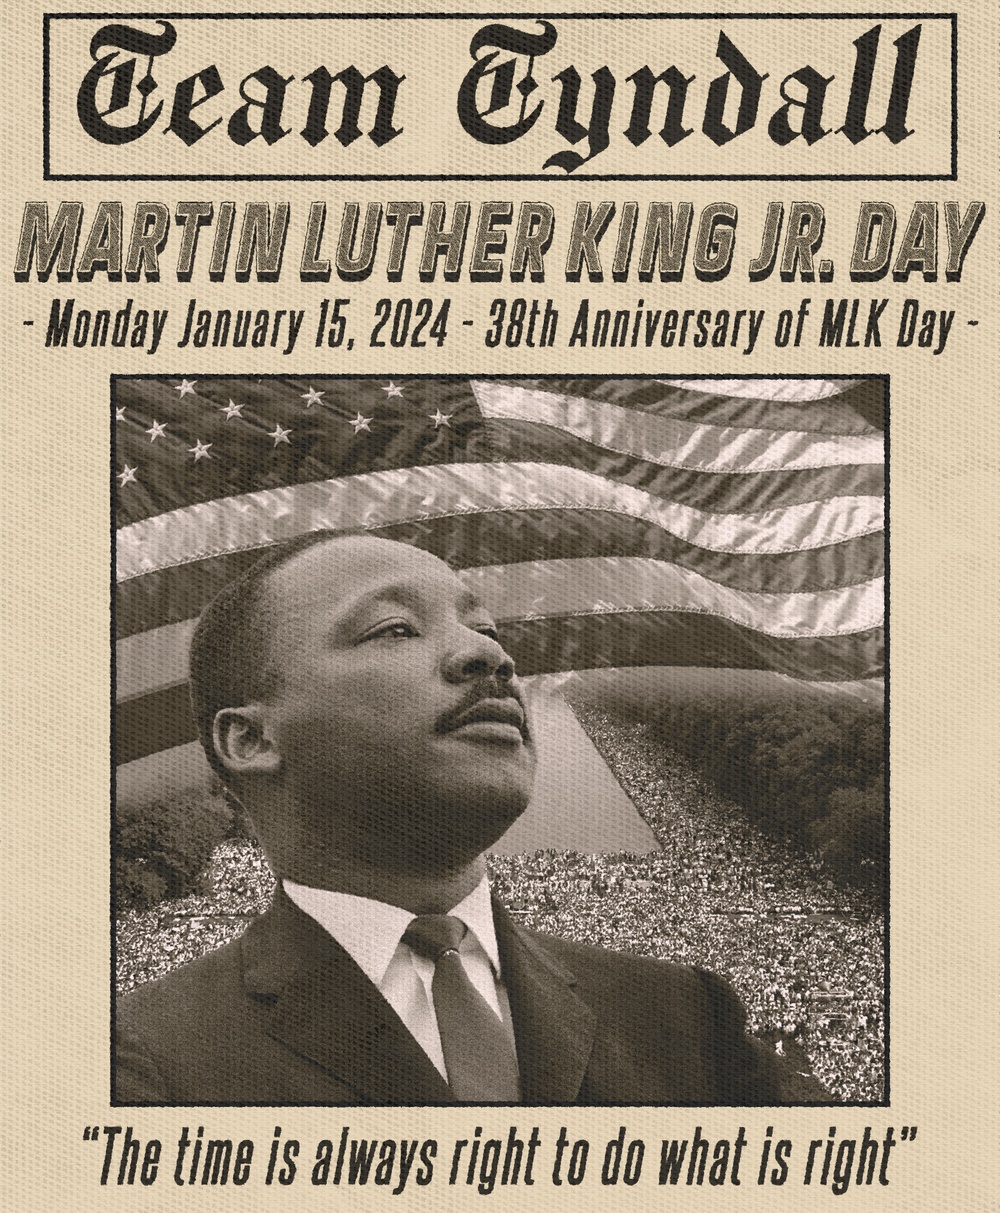 Celebrating Dr. Martin Luther King Jr. Day